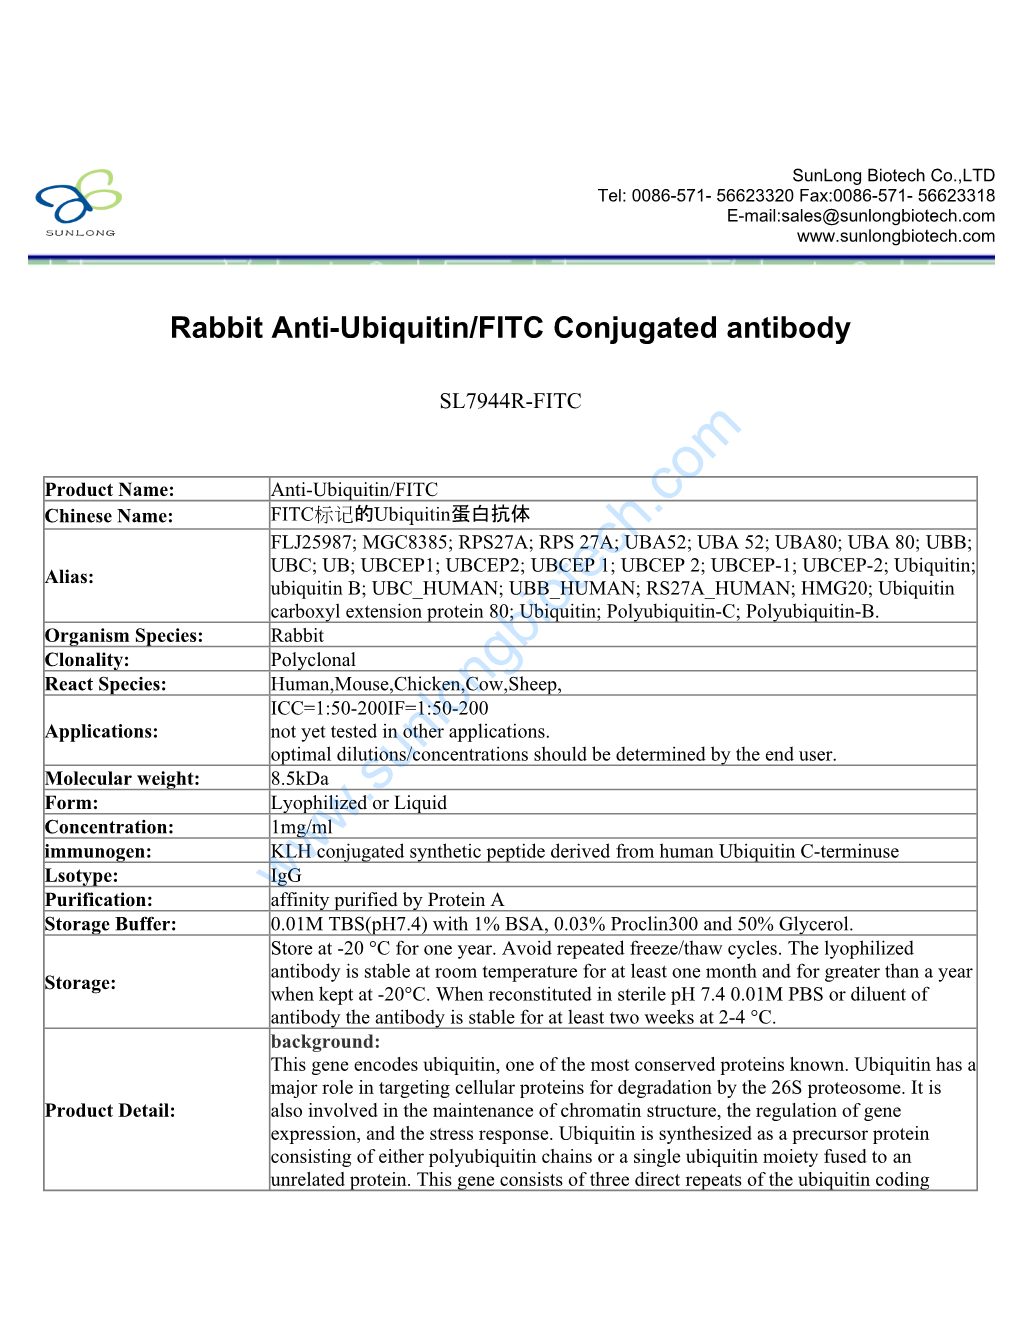 Rabbit Anti-Ubiquitin/FITC Conjugated Antibody